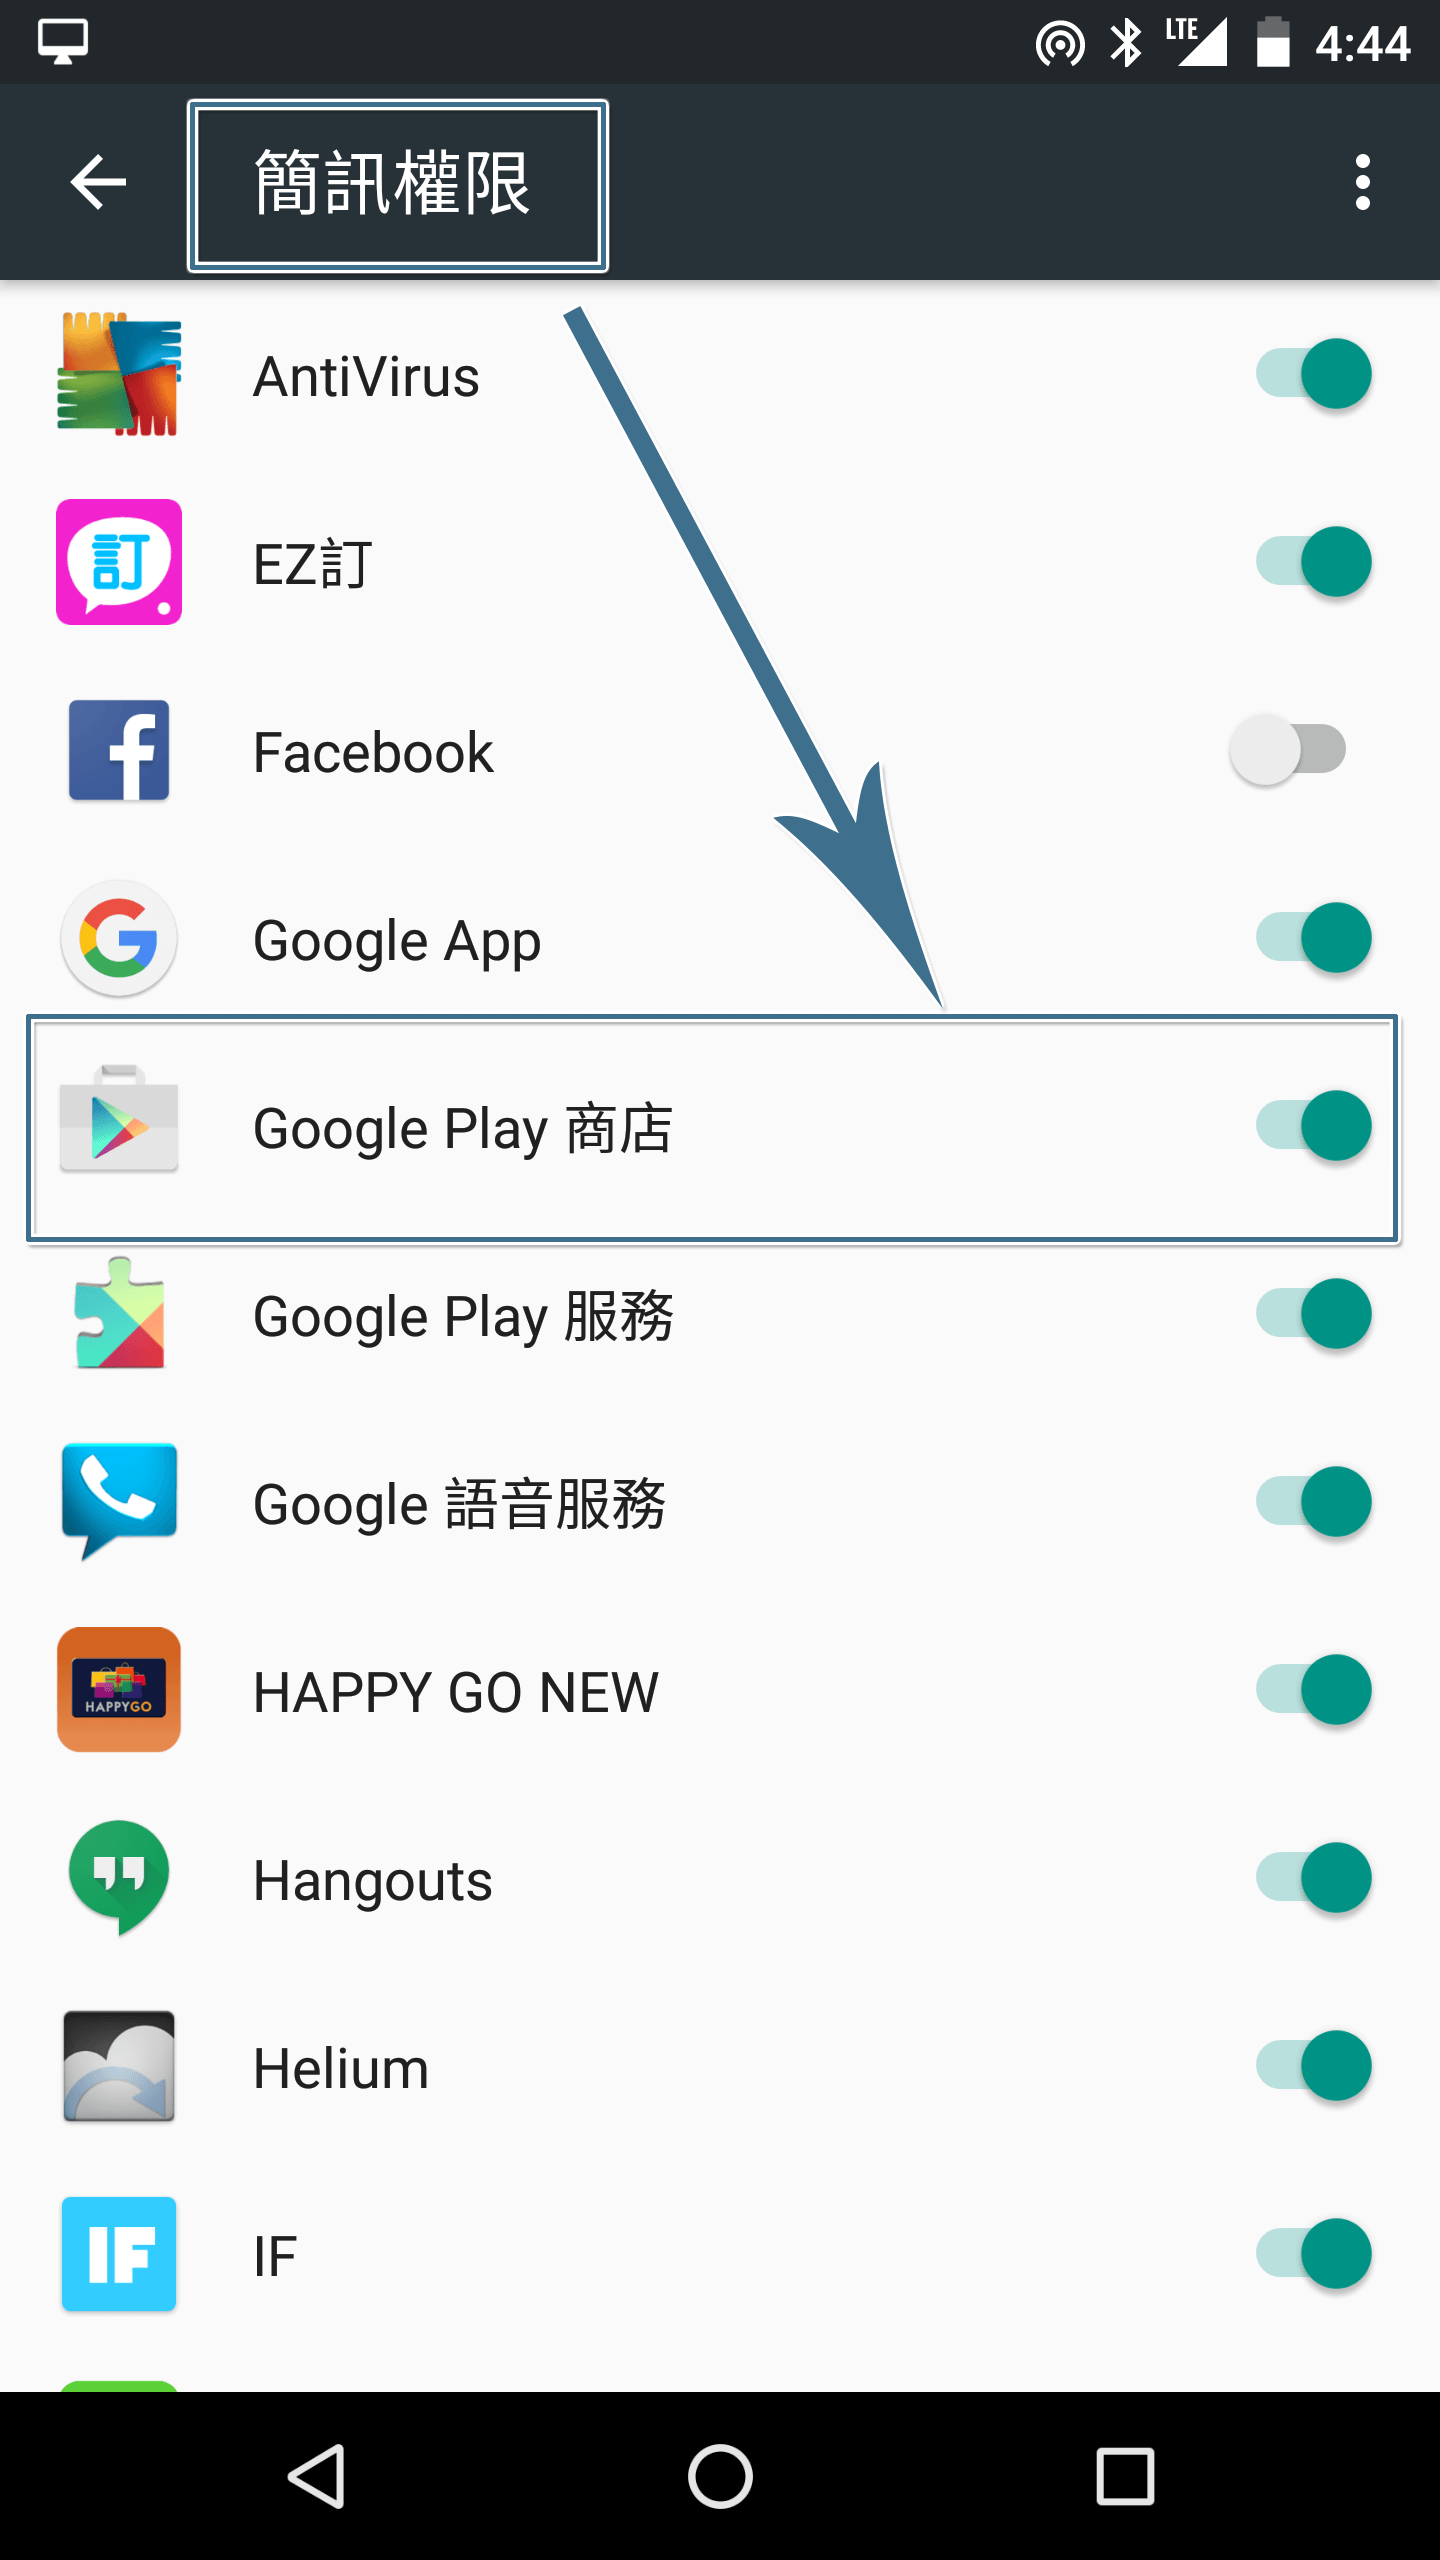 Google Play 商店 App 必須具備 [簡訊] 權限才能順利啟用「電信代扣」功能